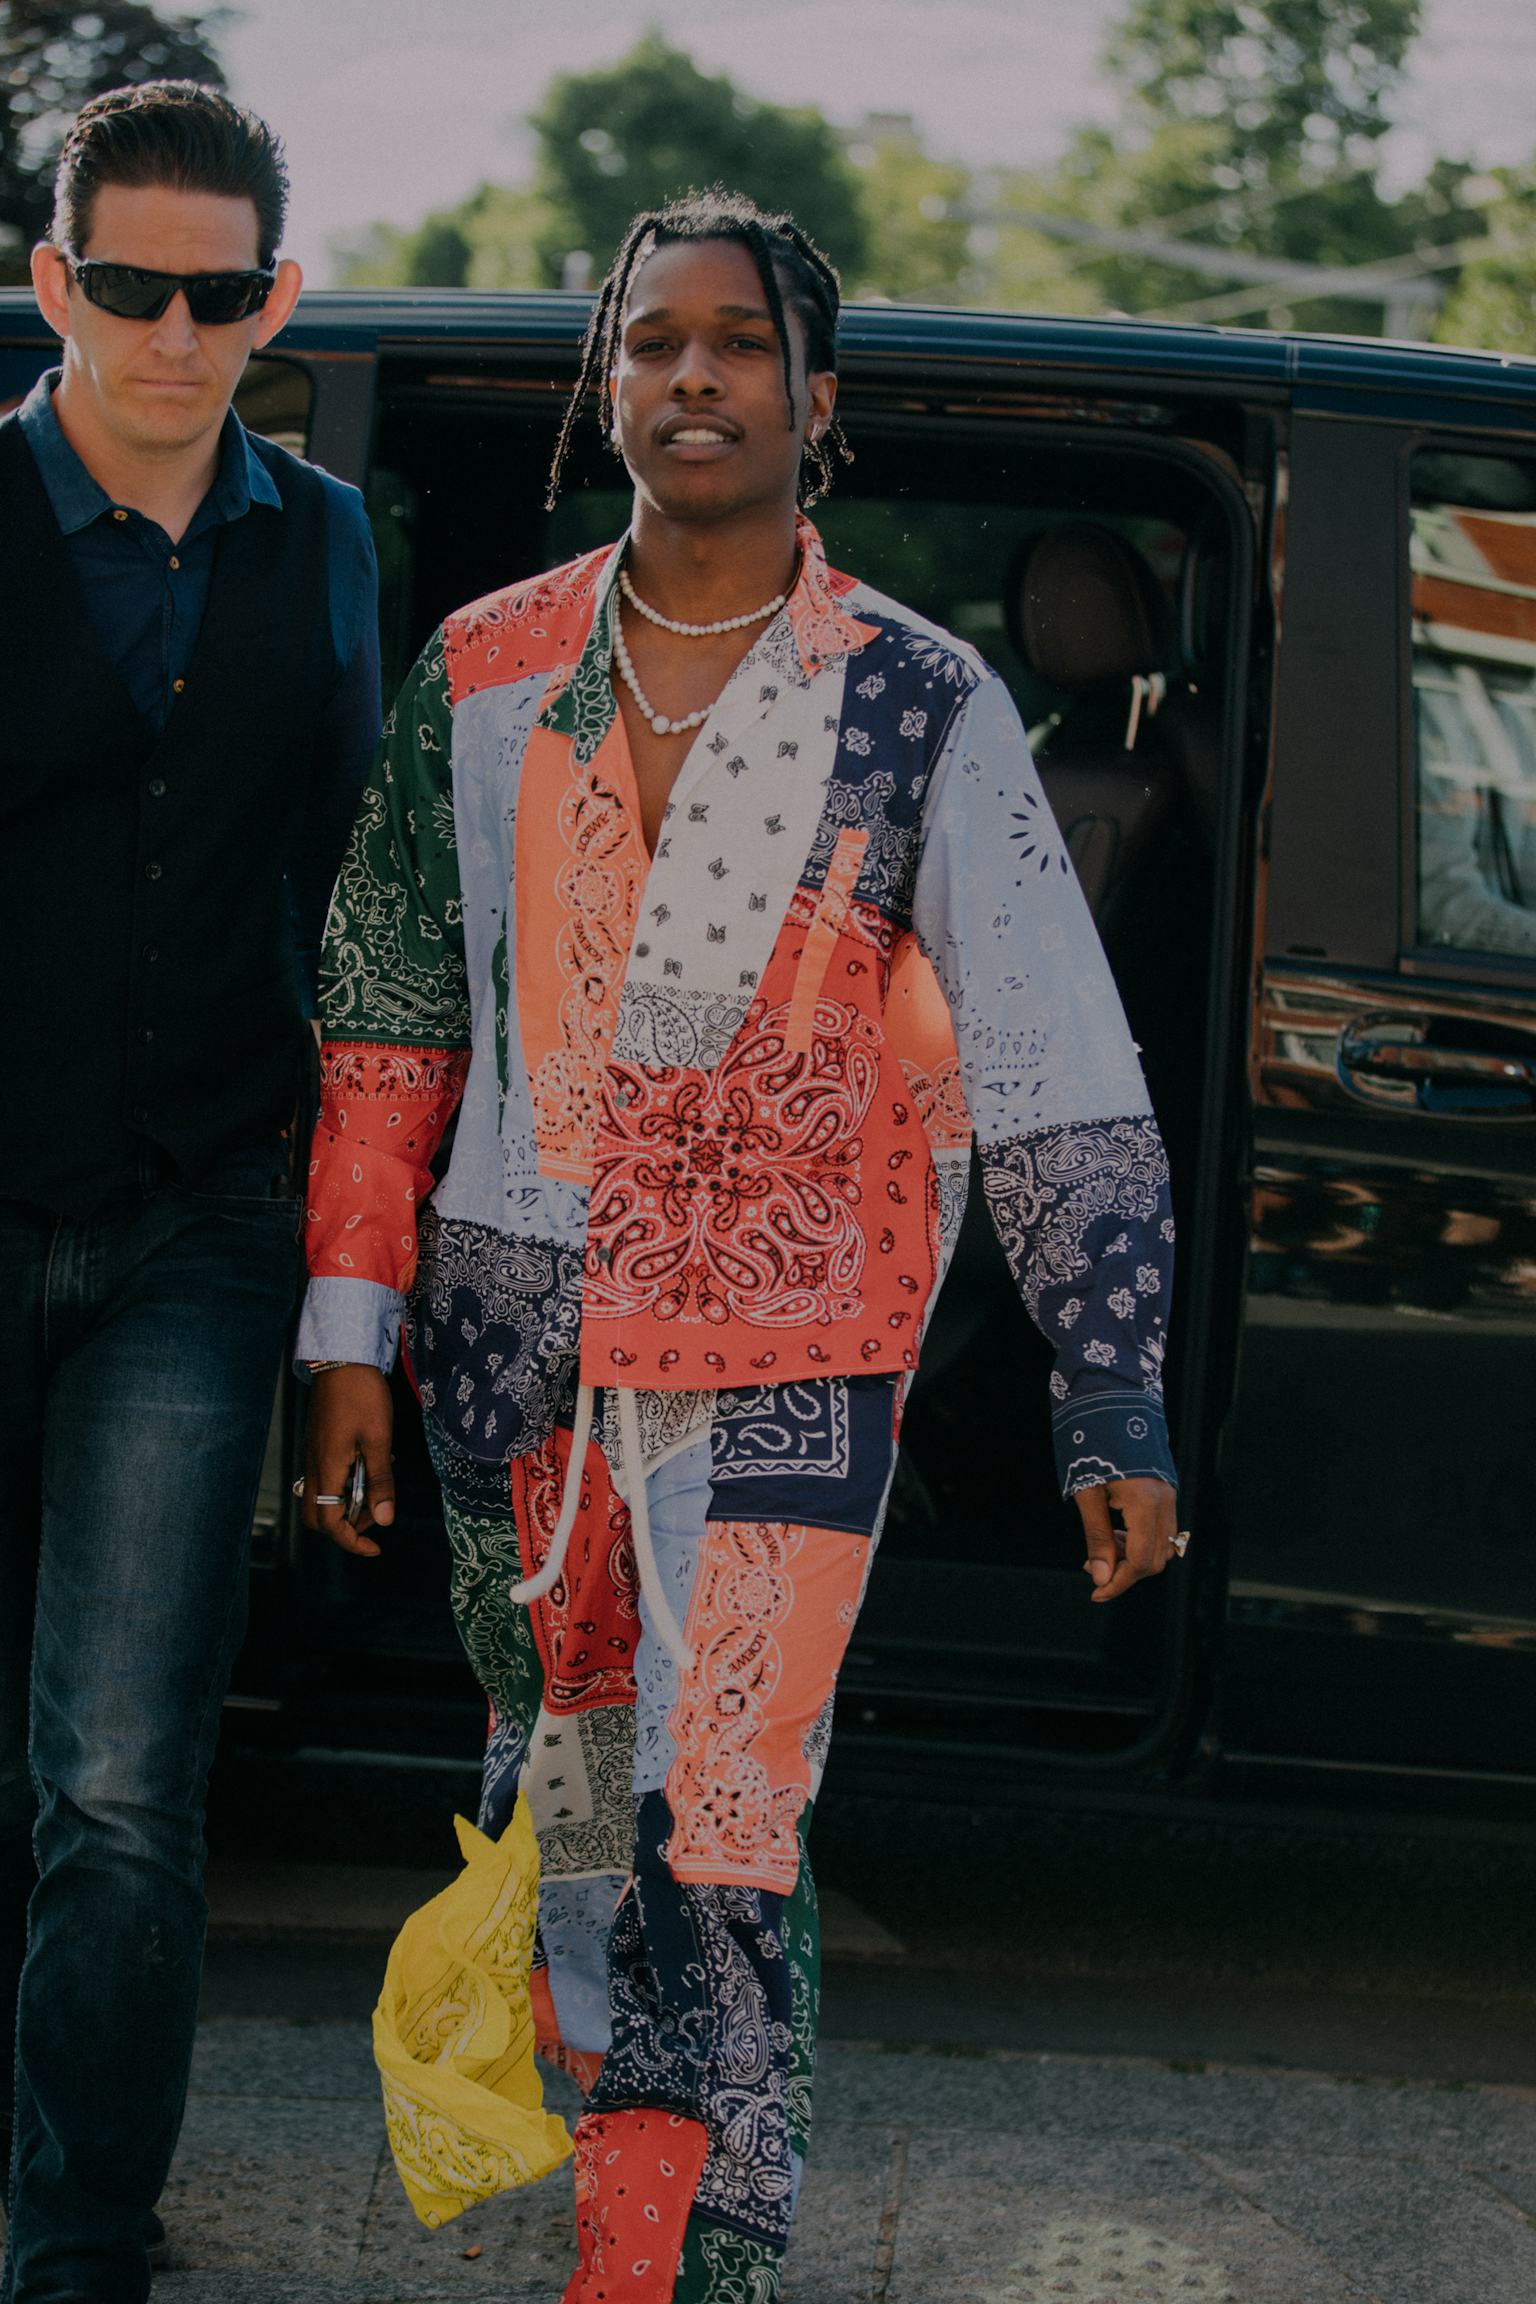 How to dress like fashion god A$AP Rocky for under $100